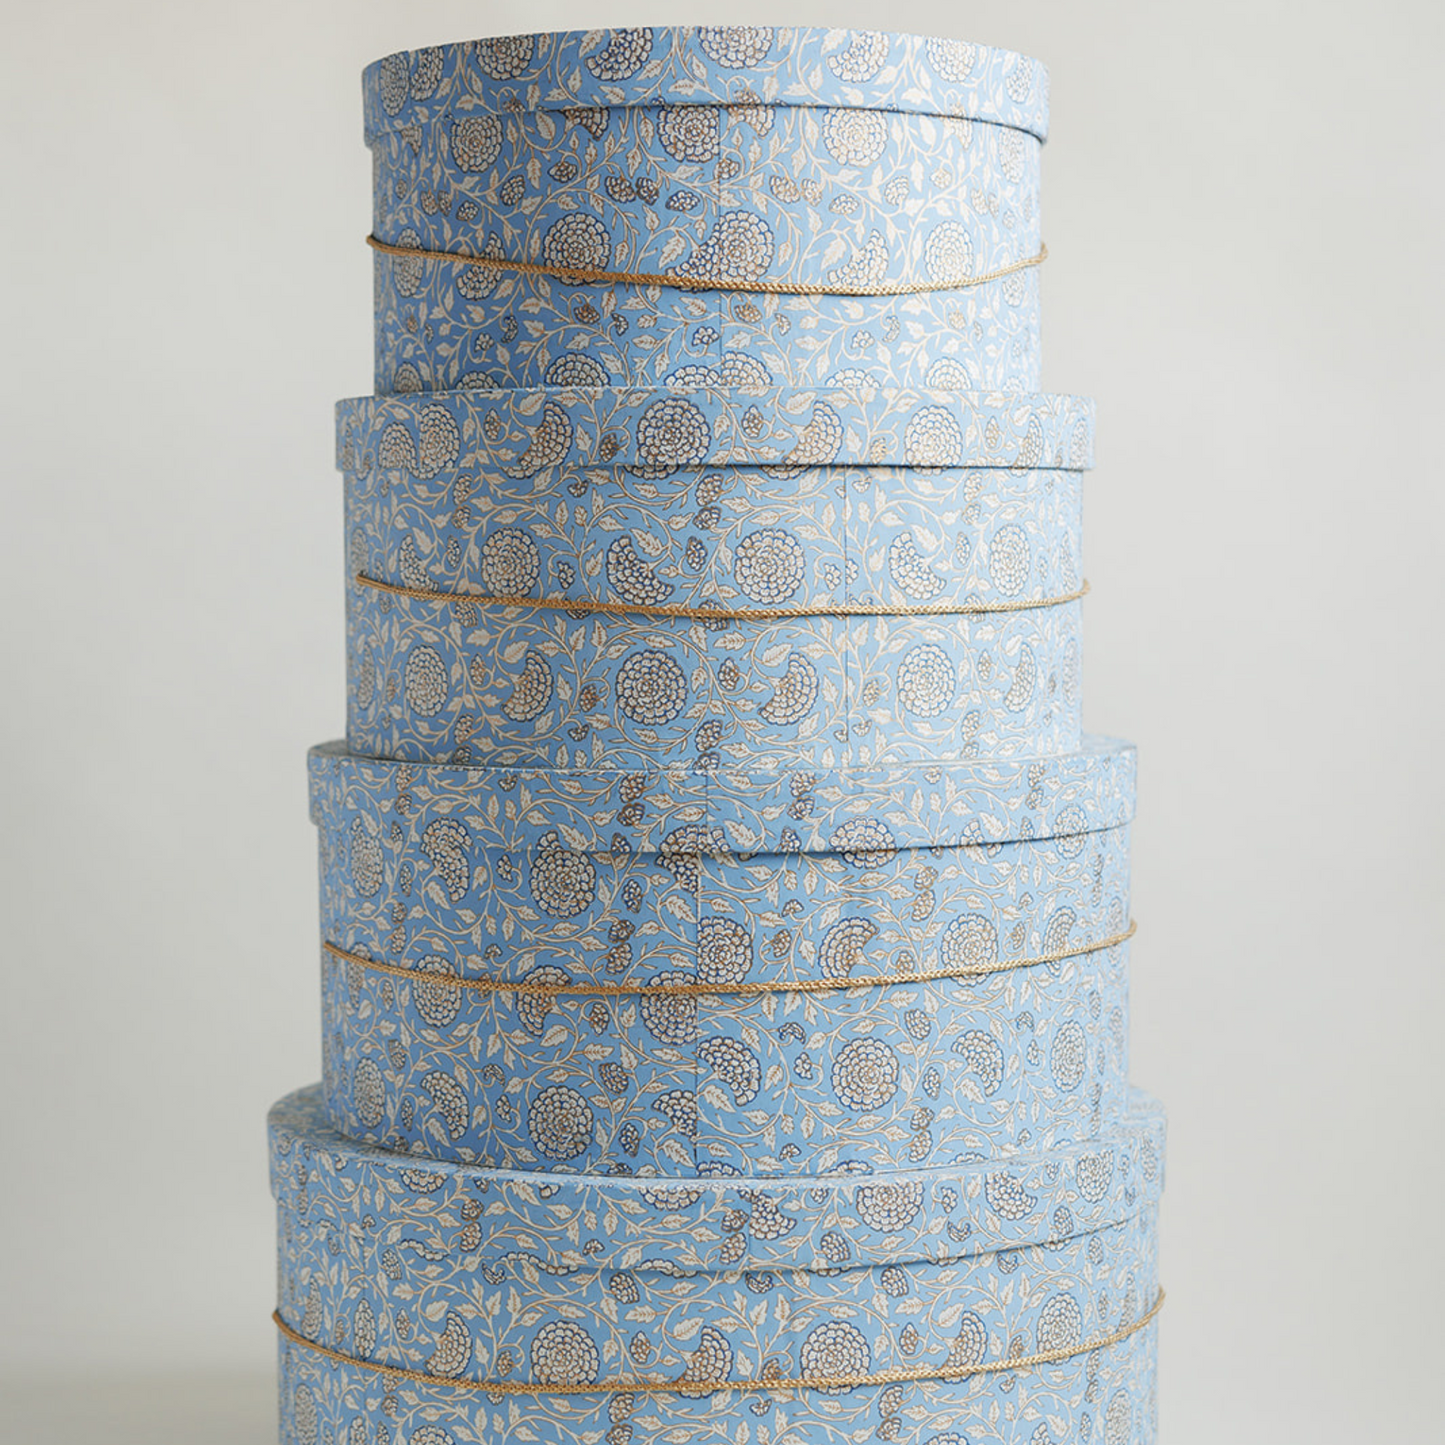 blue round hat boxes, large, extra large, small and medium sizes